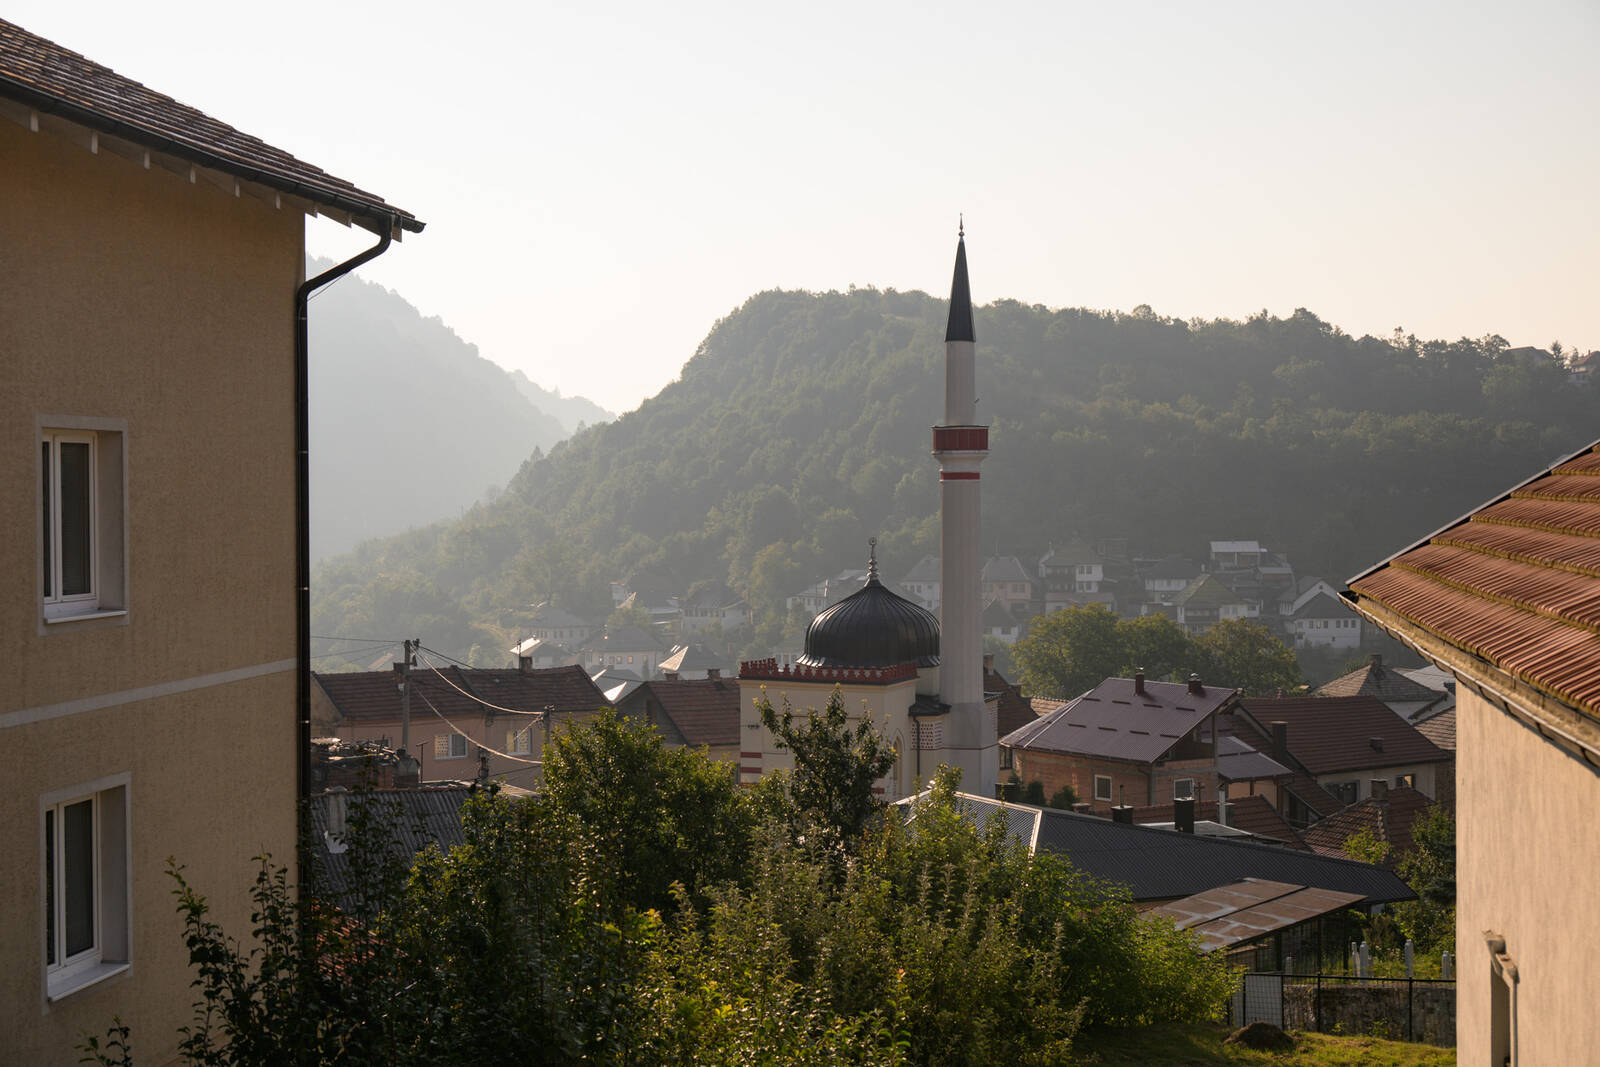 Image of Varoš of Travnik by Luka Esenko